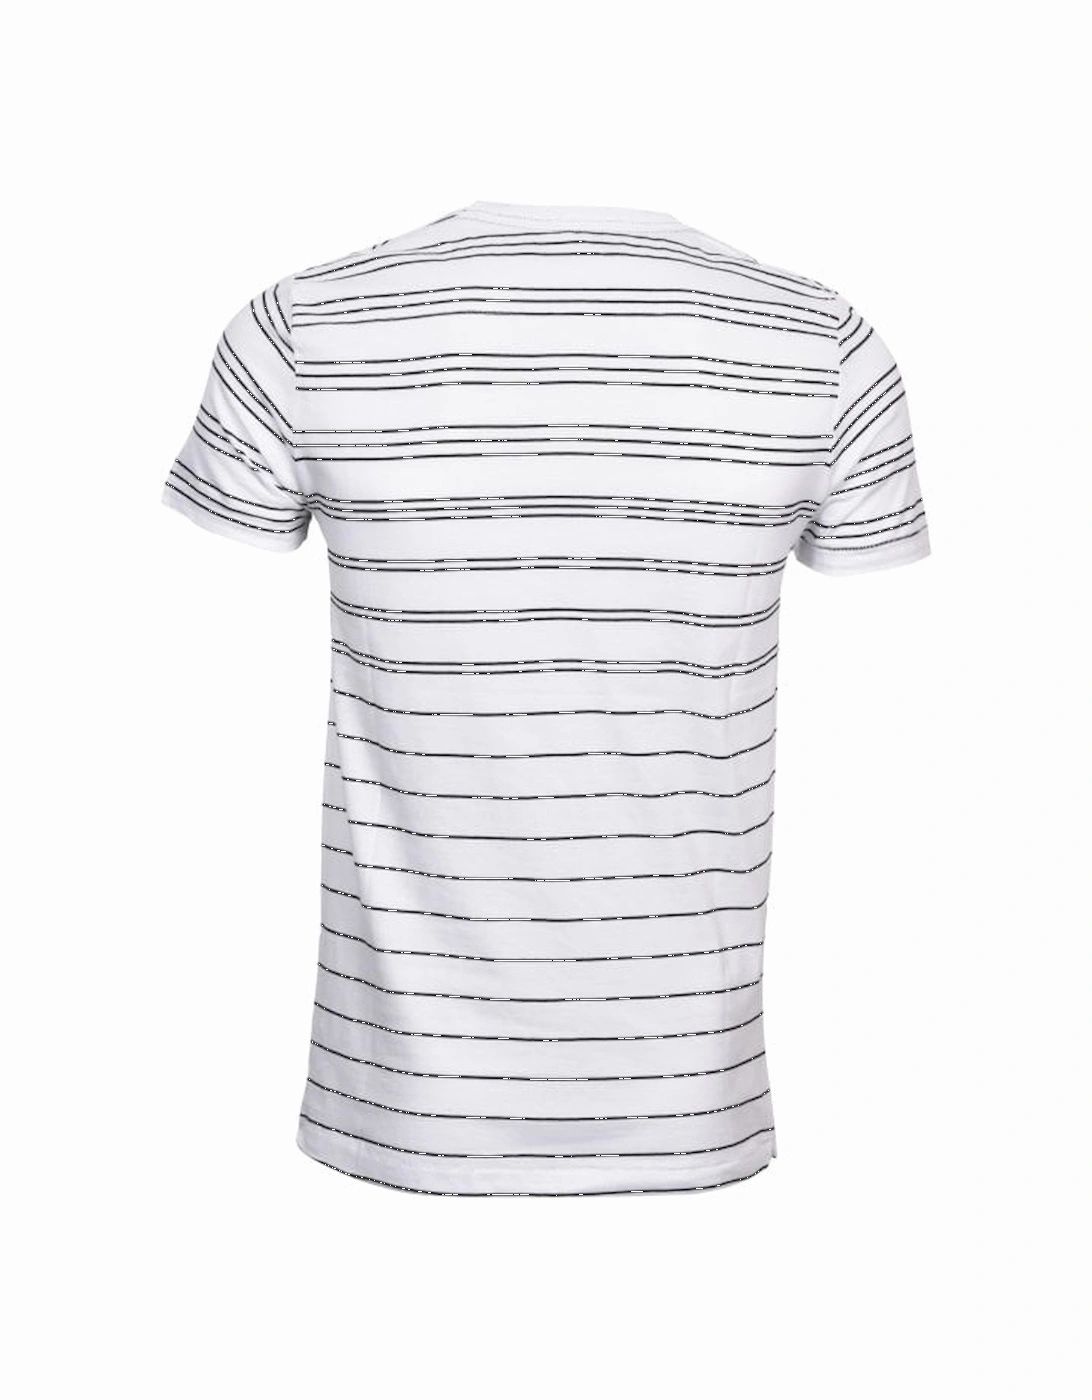 Striped Crew-Neck Pocket T-Shirt, White/navy